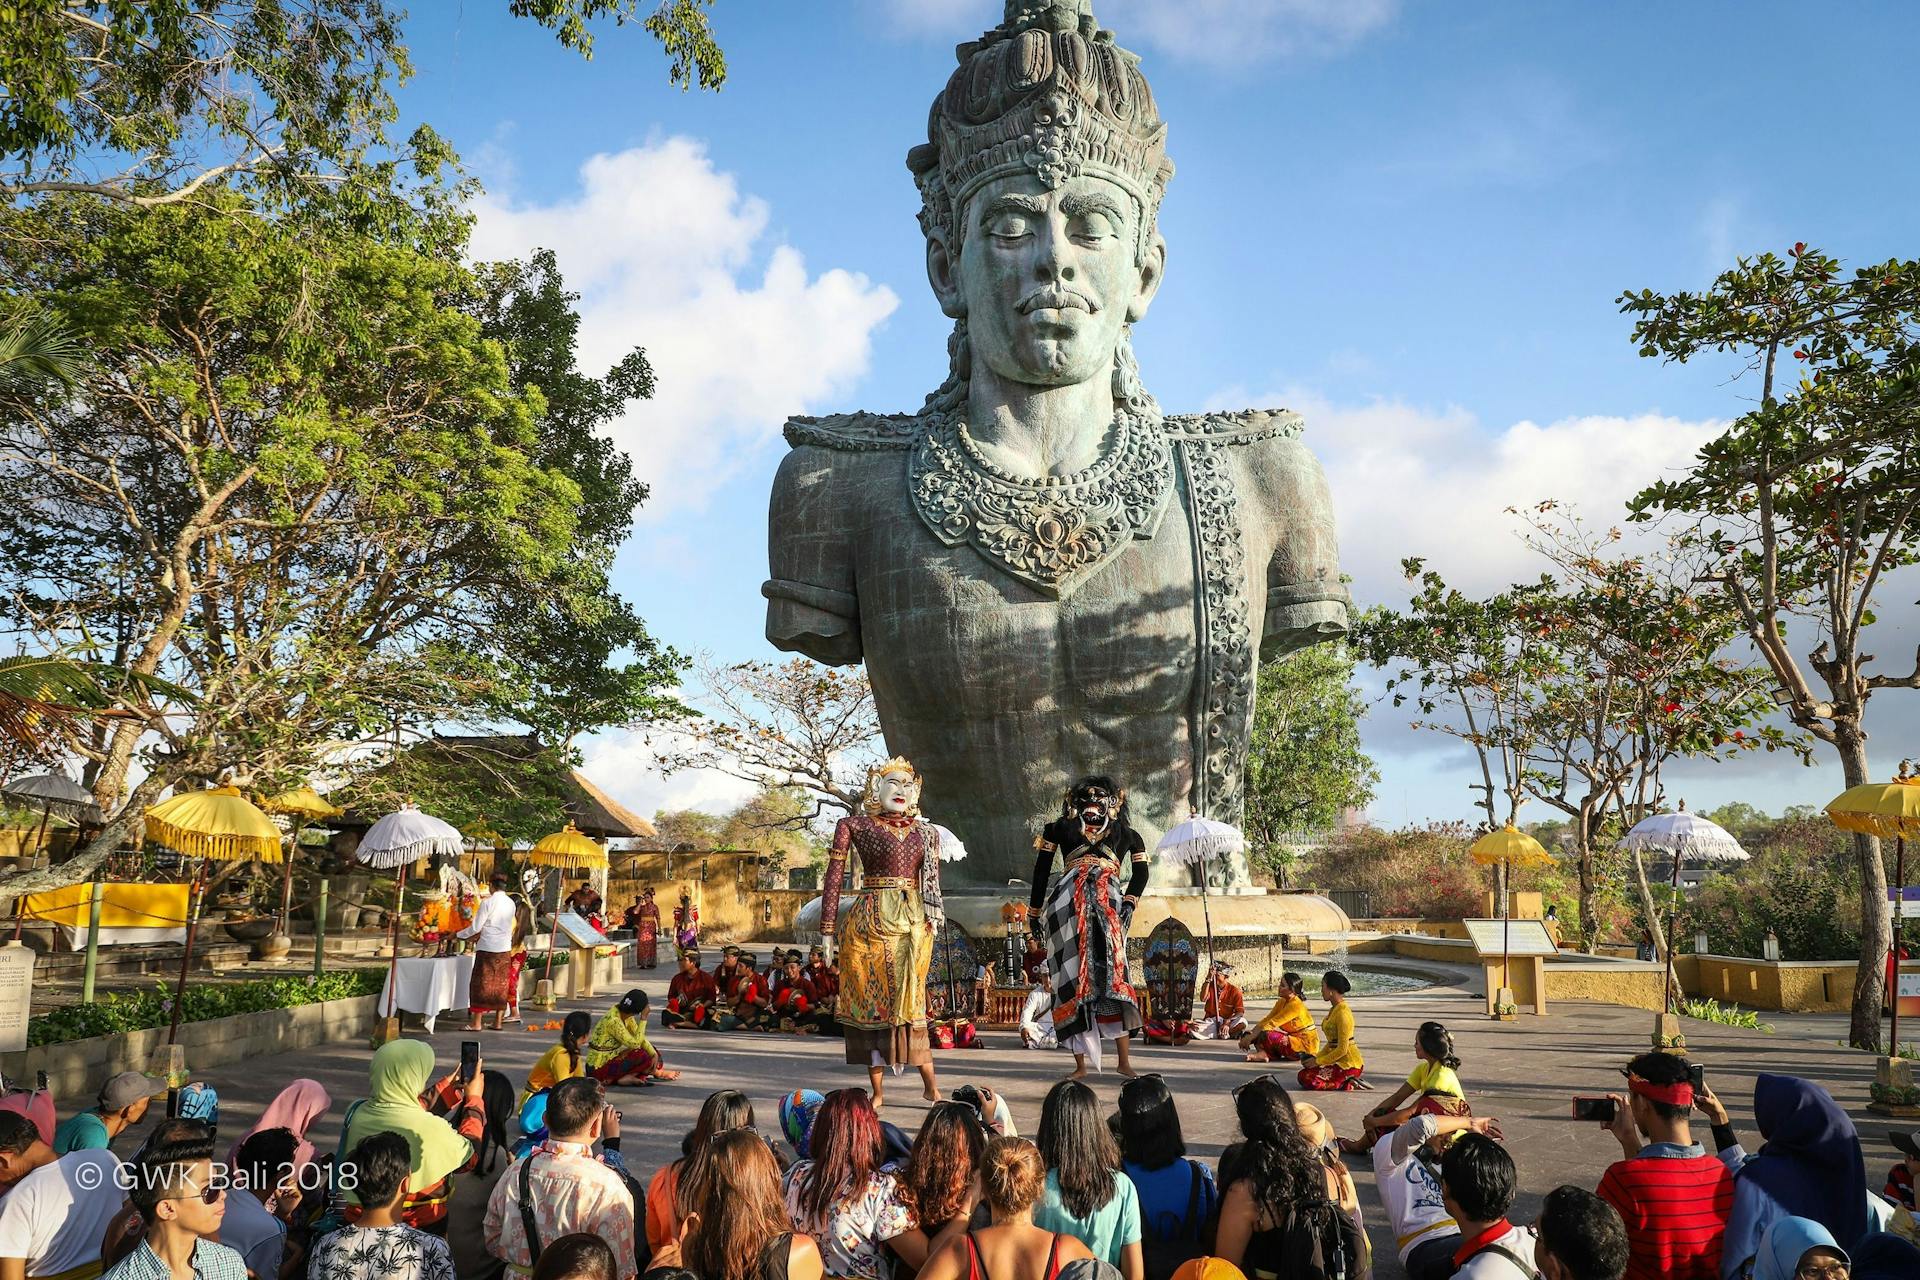 Balinese cultural performance at Plaza Wisnu